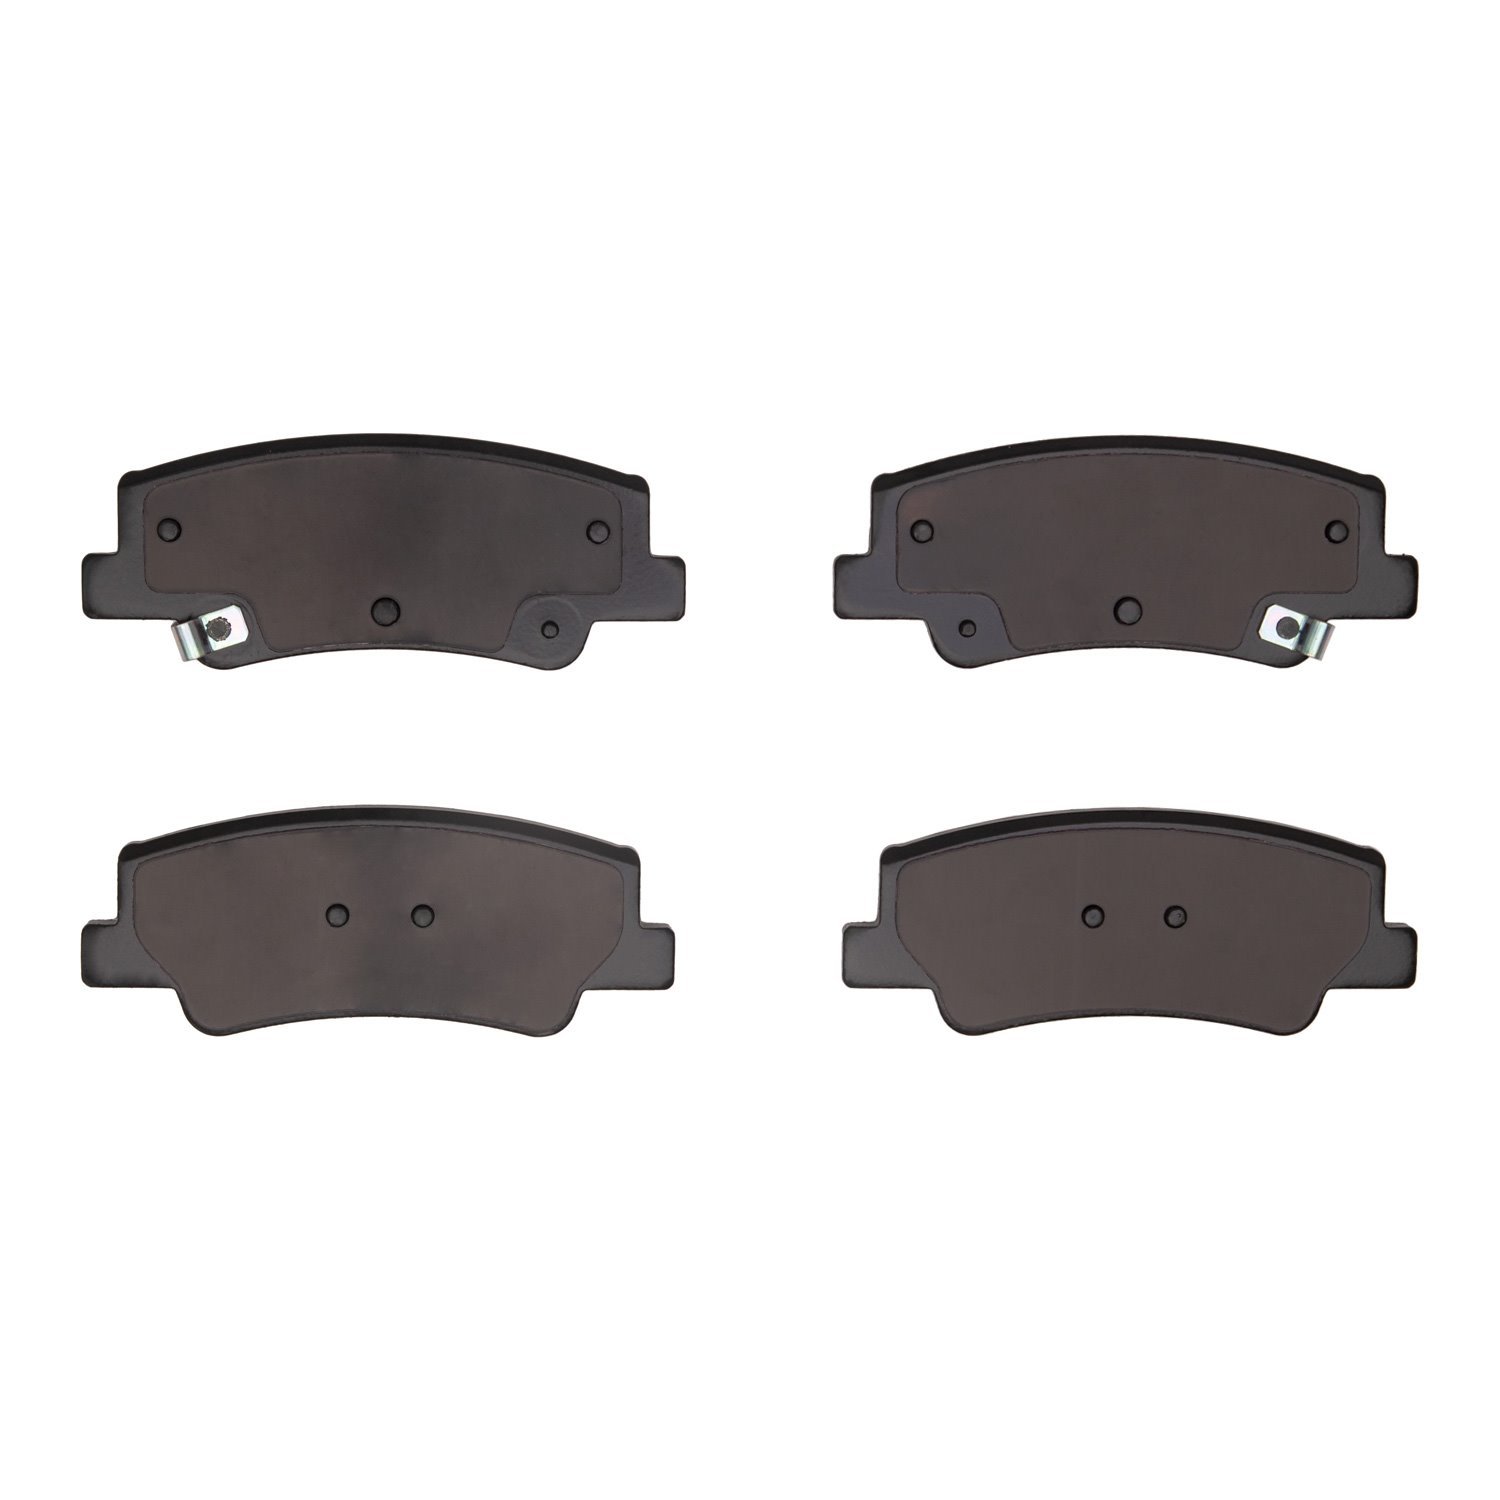 1310-2299-00 3000-Series Ceramic Brake Pads, Fits Select Kia/Hyundai/Genesis, Position: Rear